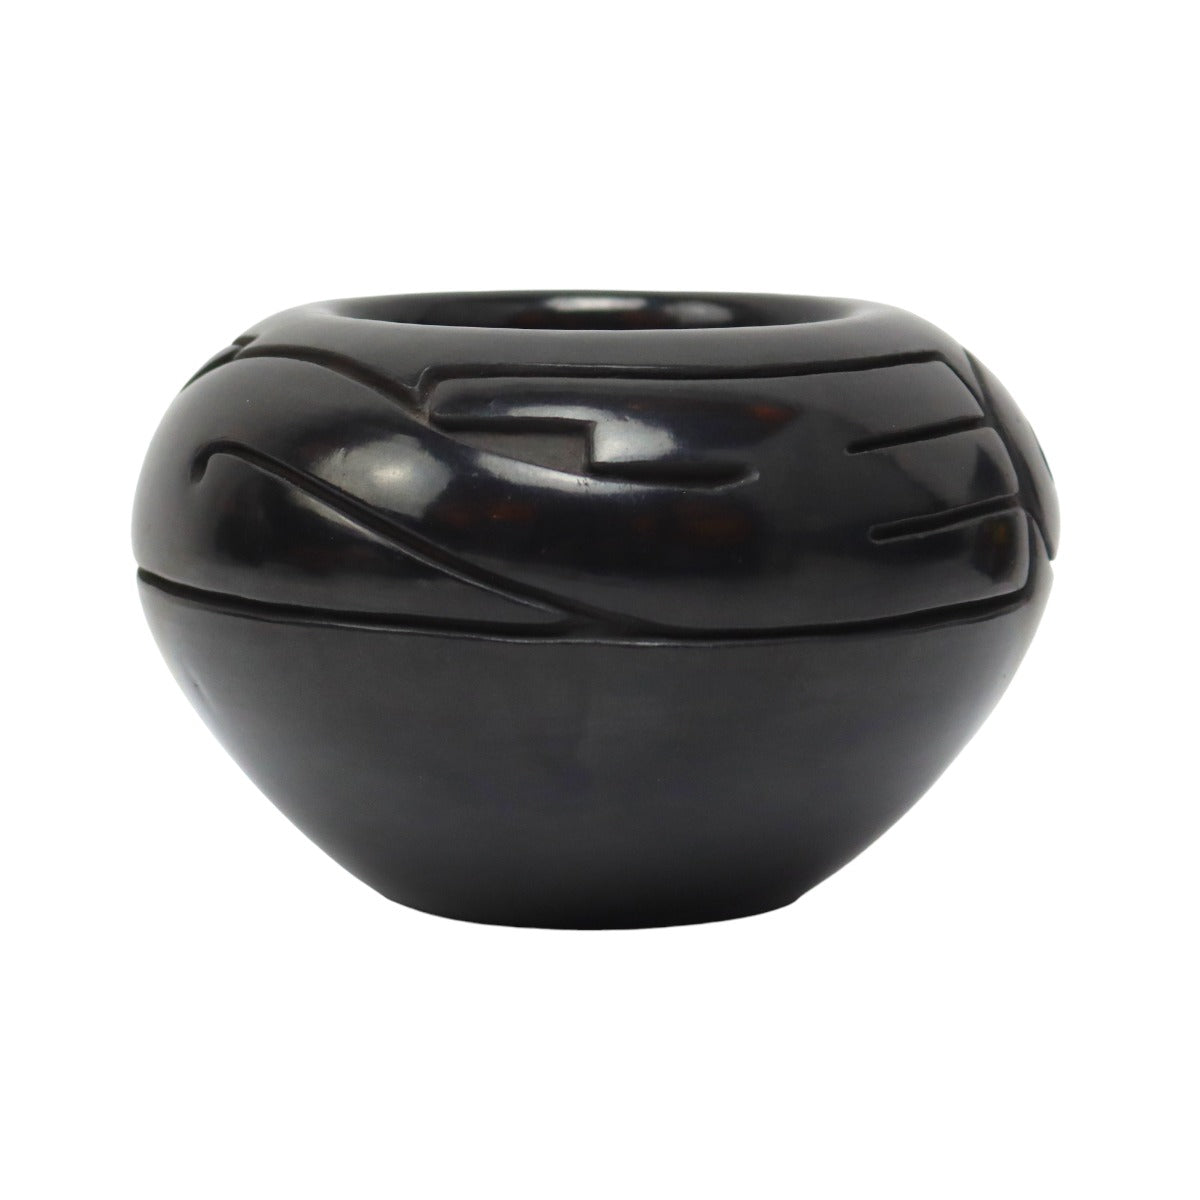 Toni Roller (b. 1935) - Santa Clara Black Jar with Carved Design c. 1976, 3" x 5" (P3570-101) 2